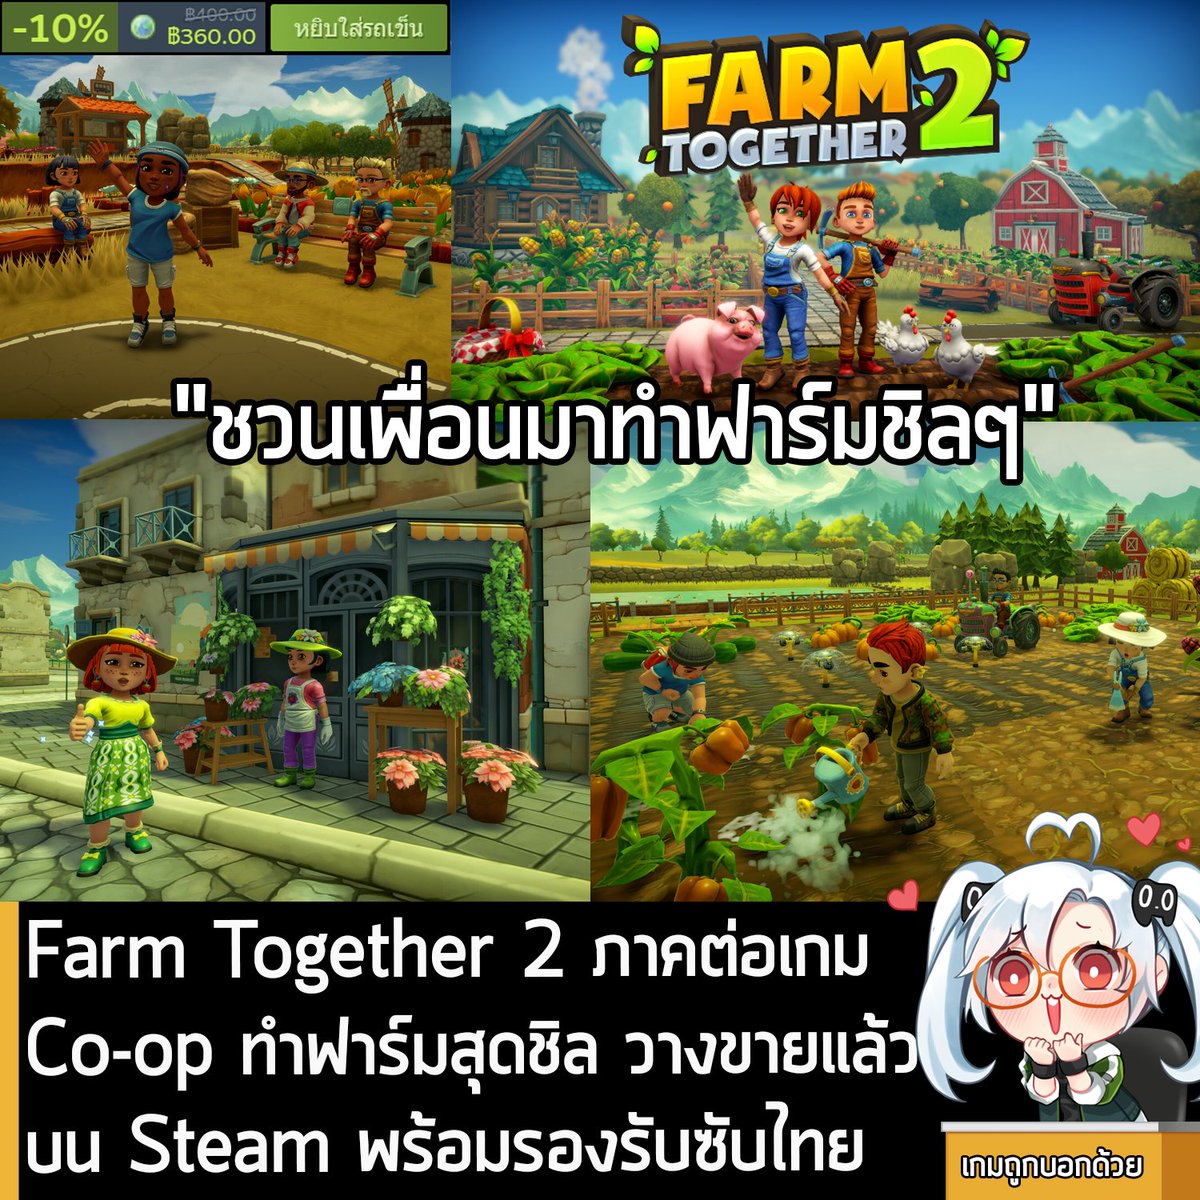 [News] Farm Together 2 ภาคต่อเกม Co-op ทำฟาร์มสุดชิล วางขายแล้วบน Steam พร้อมรองรับซับไทย . ในตอนนี้ Farm Together 2 ภาคต่อของเกม Co-op ช่วยกันทำฟาร์มสุดชิล ก็ได้วางจำหน่ายในรูปแบบ Early Access บน Steam เป็นที่เรียบร้อยแล้วนะครัช โดยเปิดตัวลด 10% เหลือ 360 บาท…